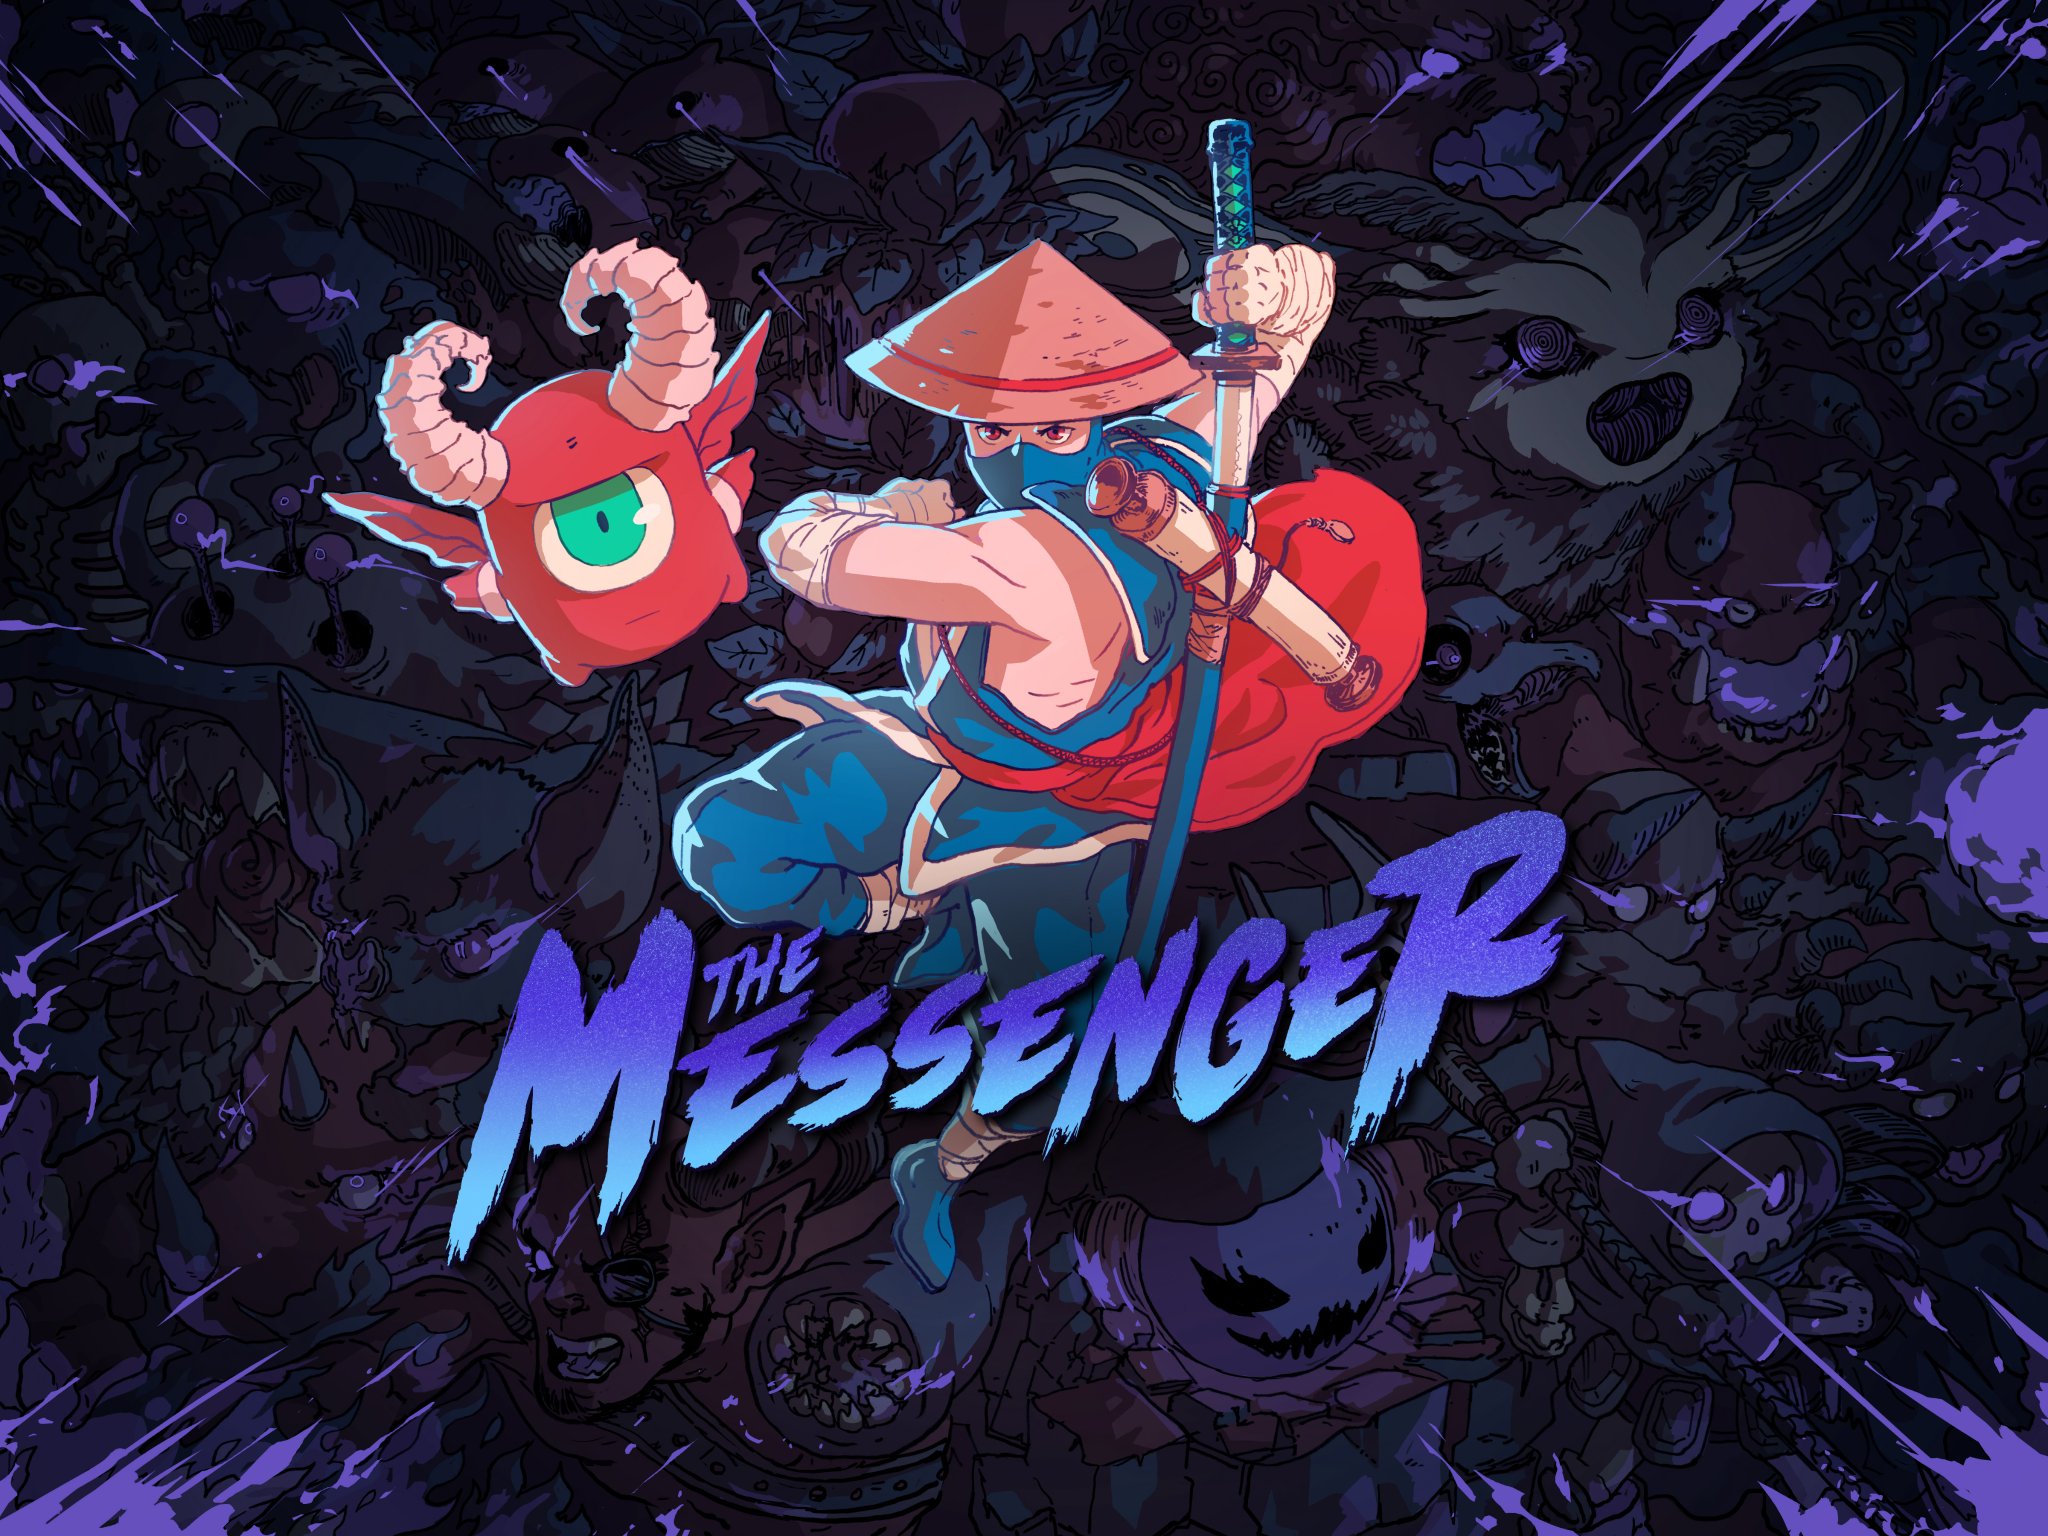 General 2048x1536 The Messenger Sabotage Studio video games sword katana video game art